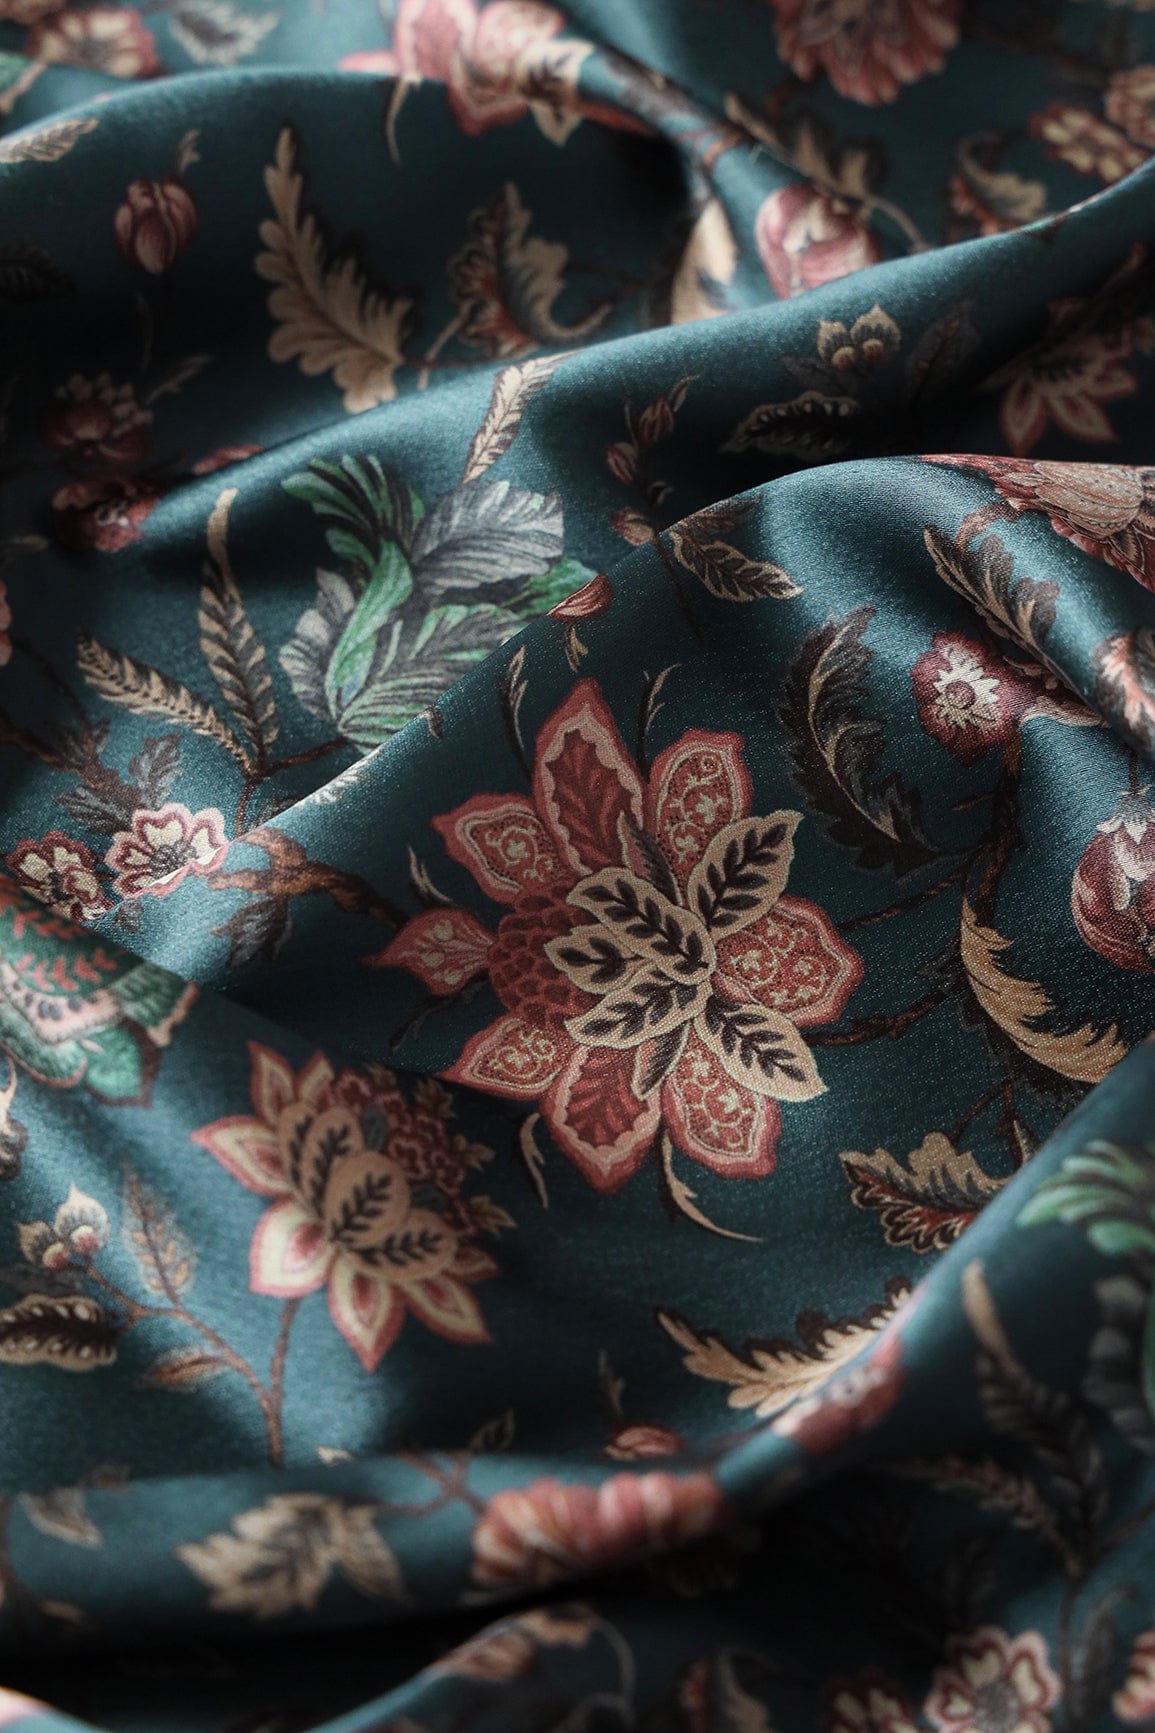 doeraa Prints Multi Color Floral Pattern Digital Print On Teal Blue Satin Fabric